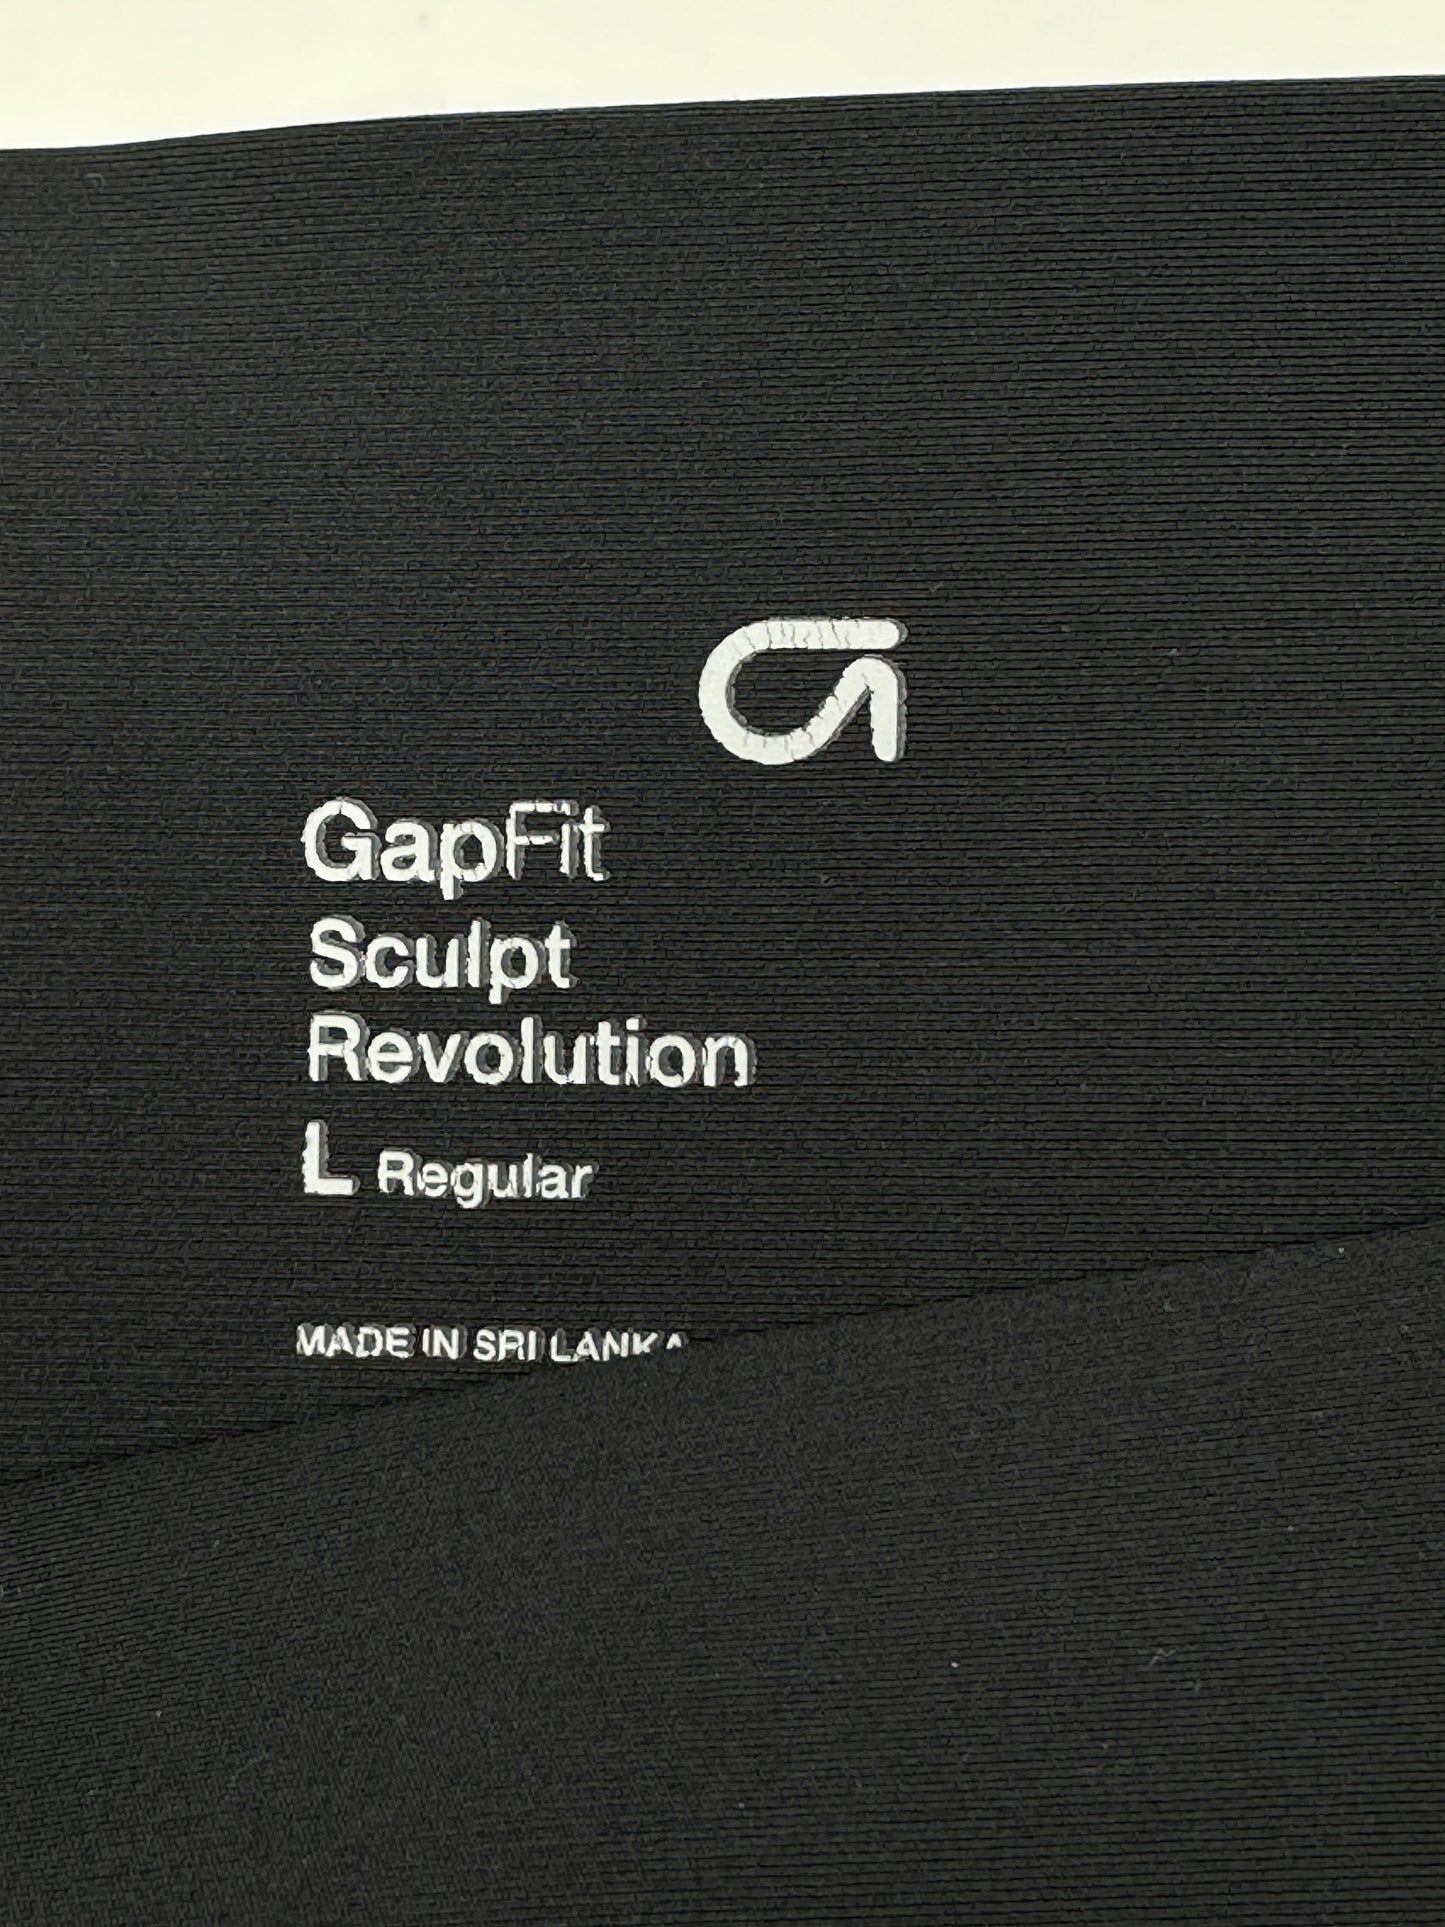 GapFit Size L Regular Black Sculpt Revolution Capri Leggings (currently have qty 2)